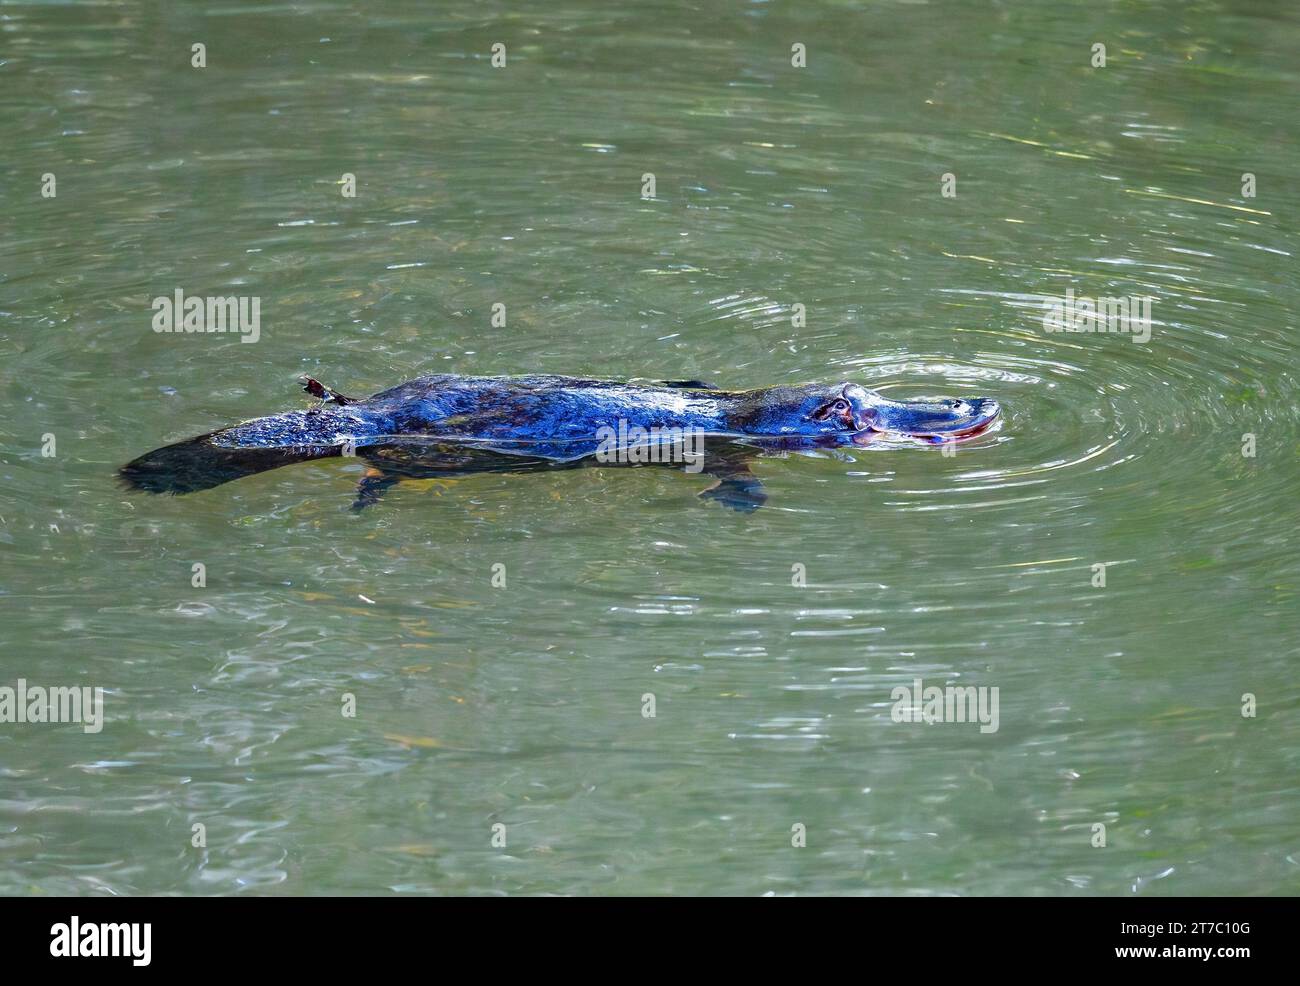 A Platypus (Ornithorhynchus anatinus) swimming in a river. Queensland, Australia. Stock Photo